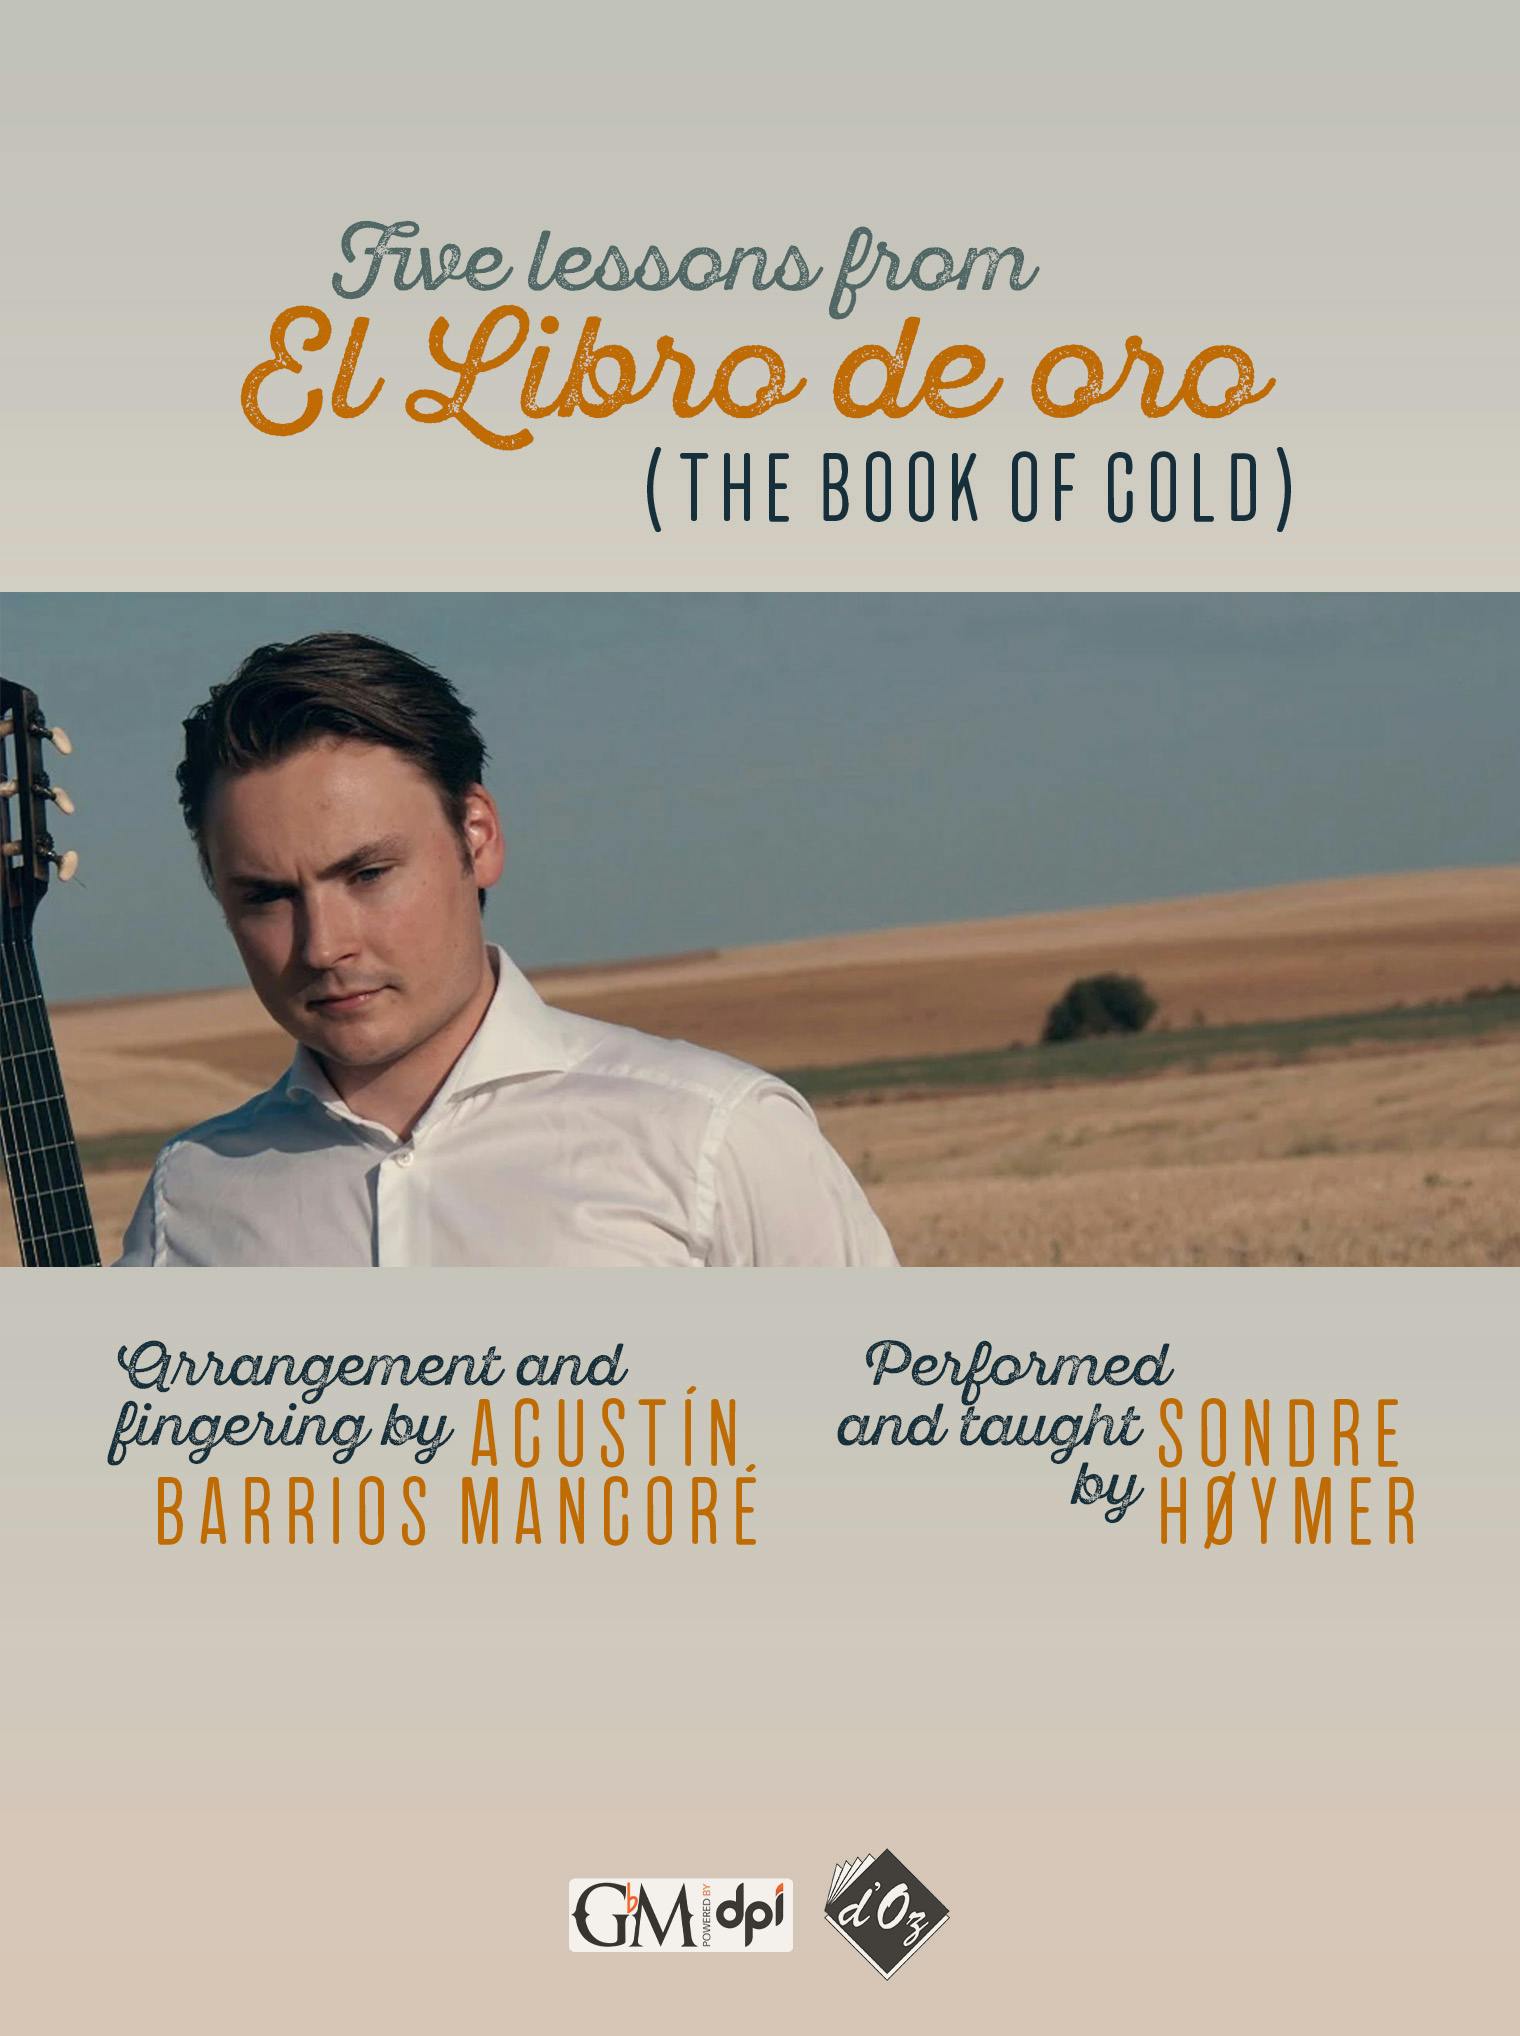 Lessons from "El Libro de oro": Vol. 2 cover